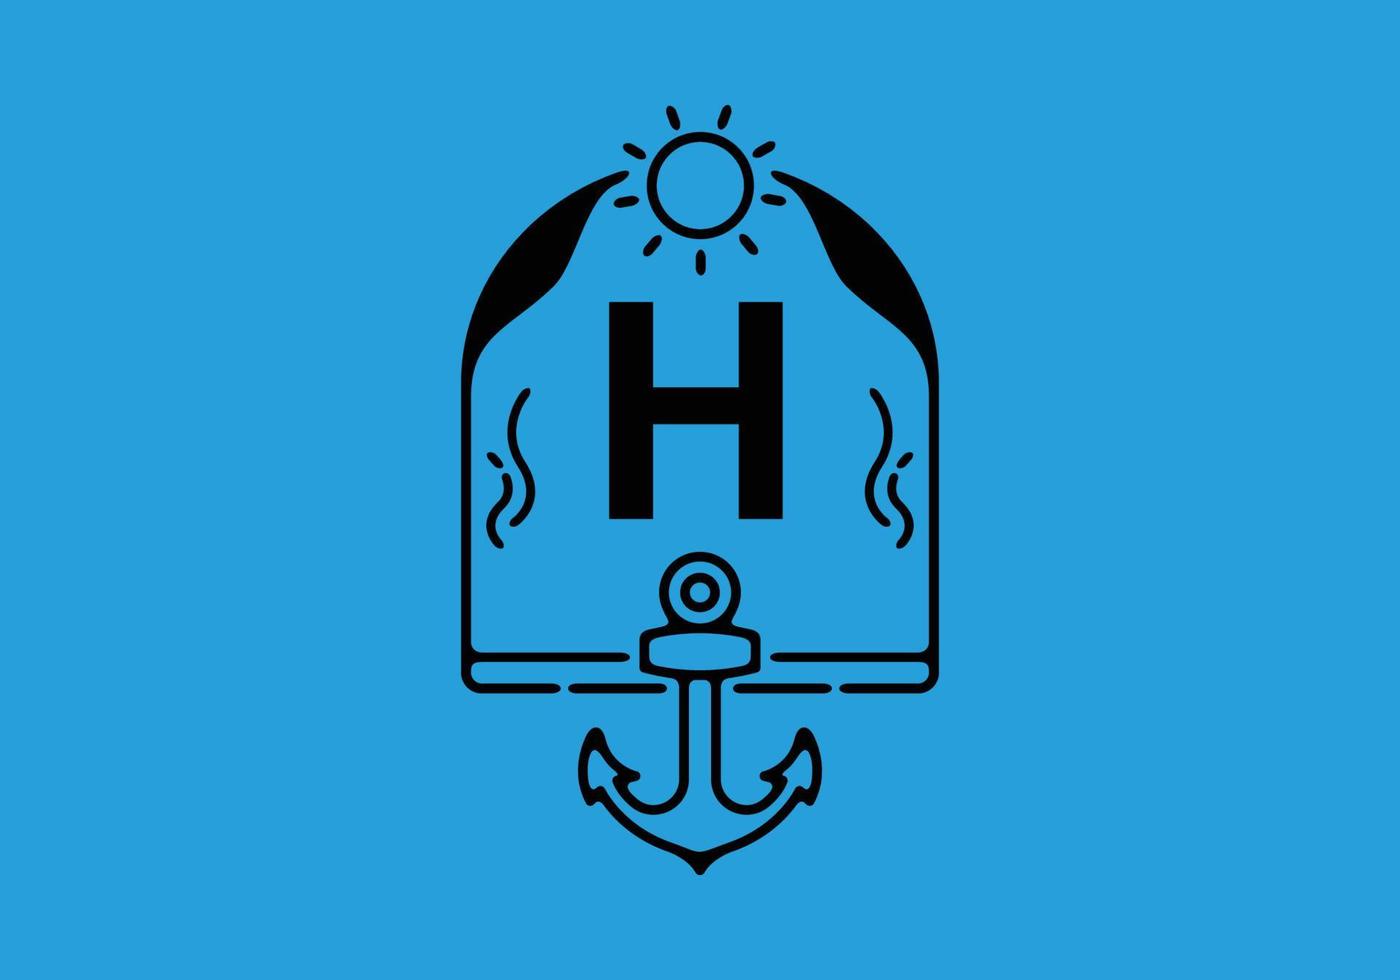 Black line art illustration of H initial letter in anchor frame vector